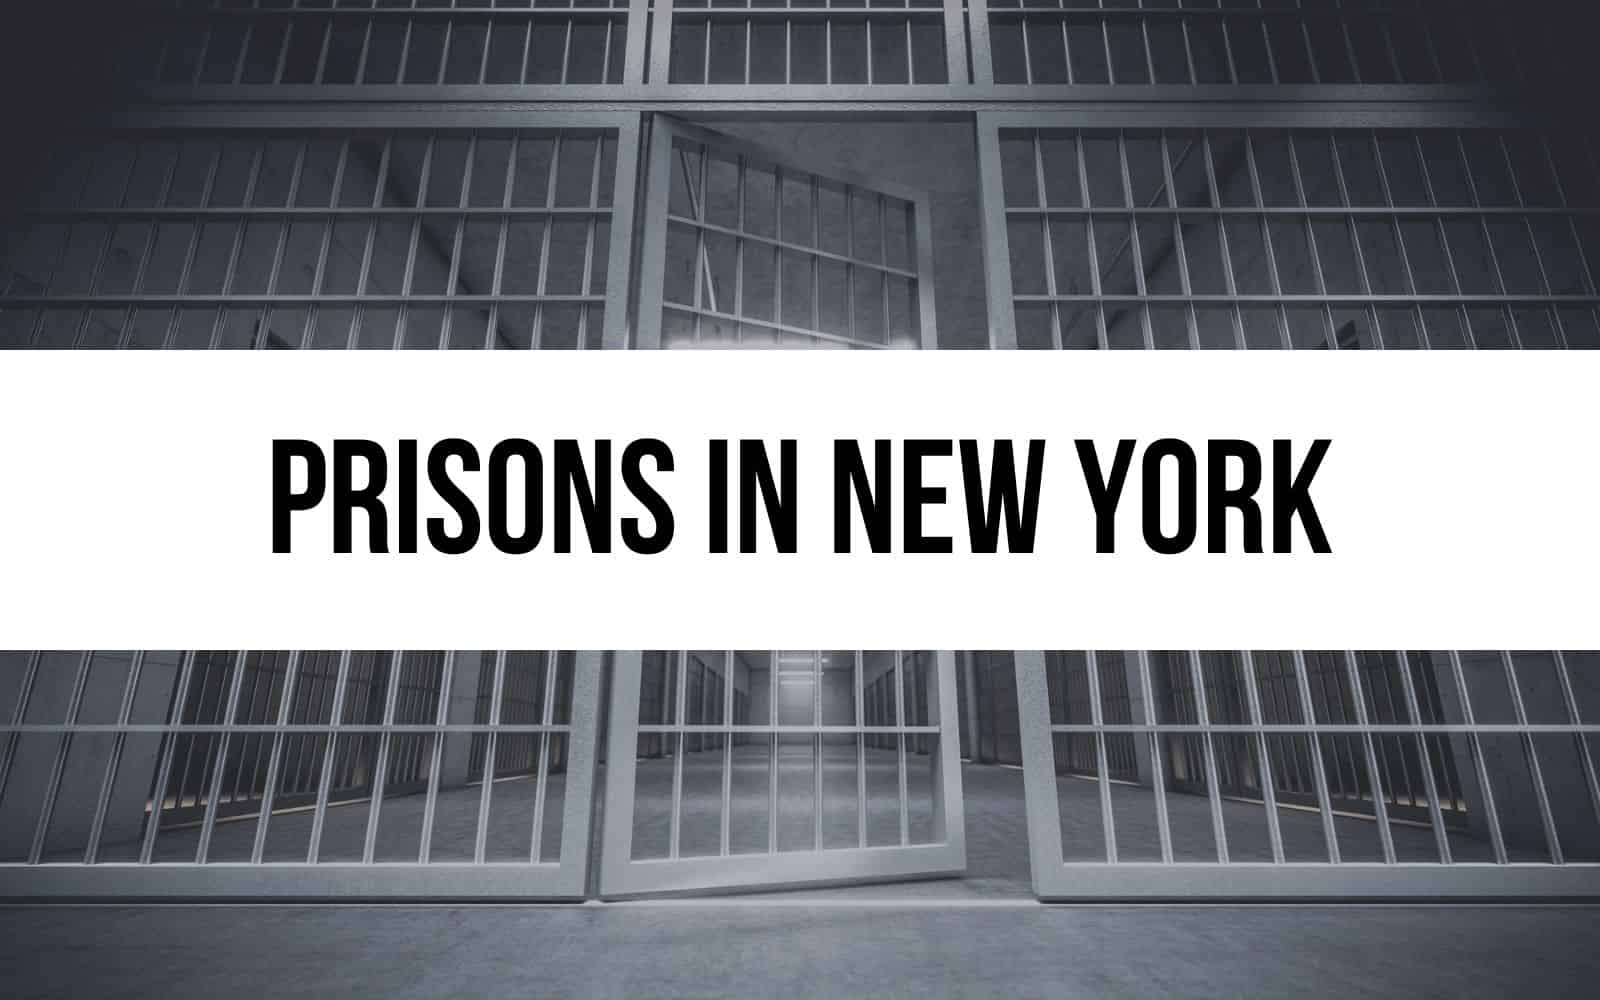 Prisons in New York